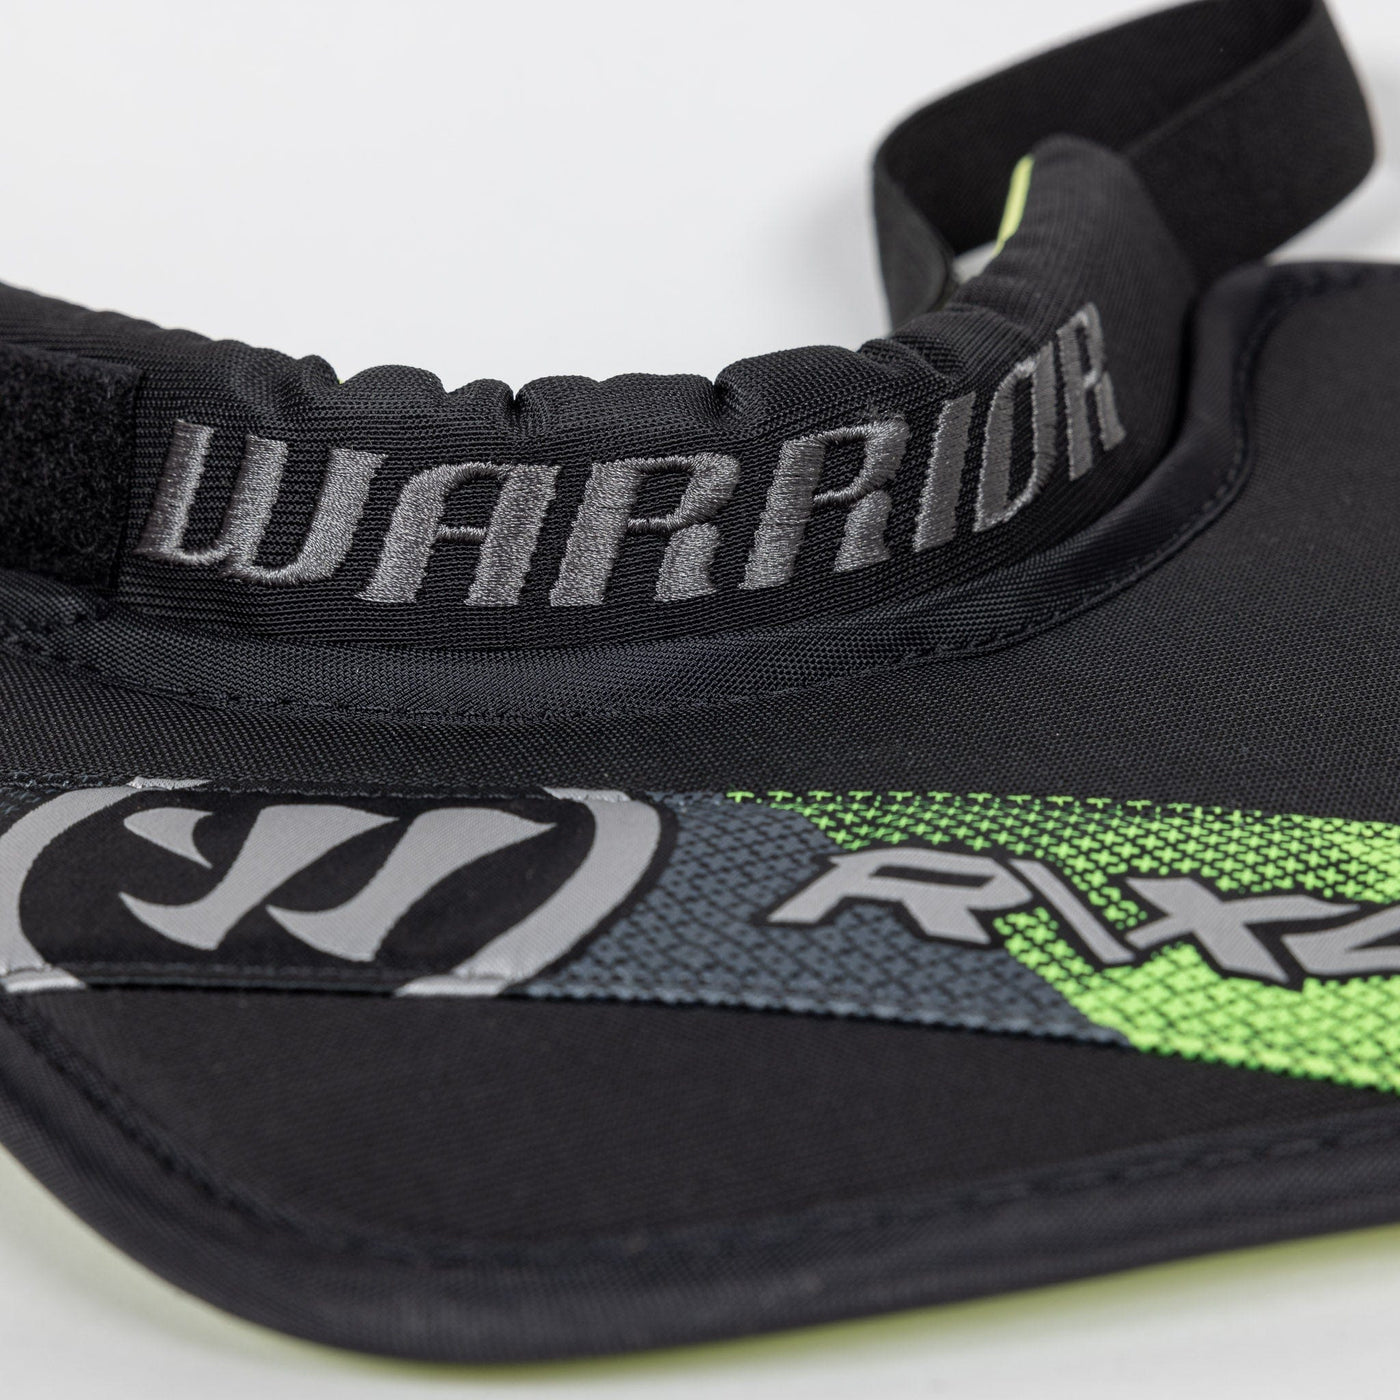 Warrior Ritual X4 E+ Senior Goalie Neck Guard - The Hockey Shop Source For Sports